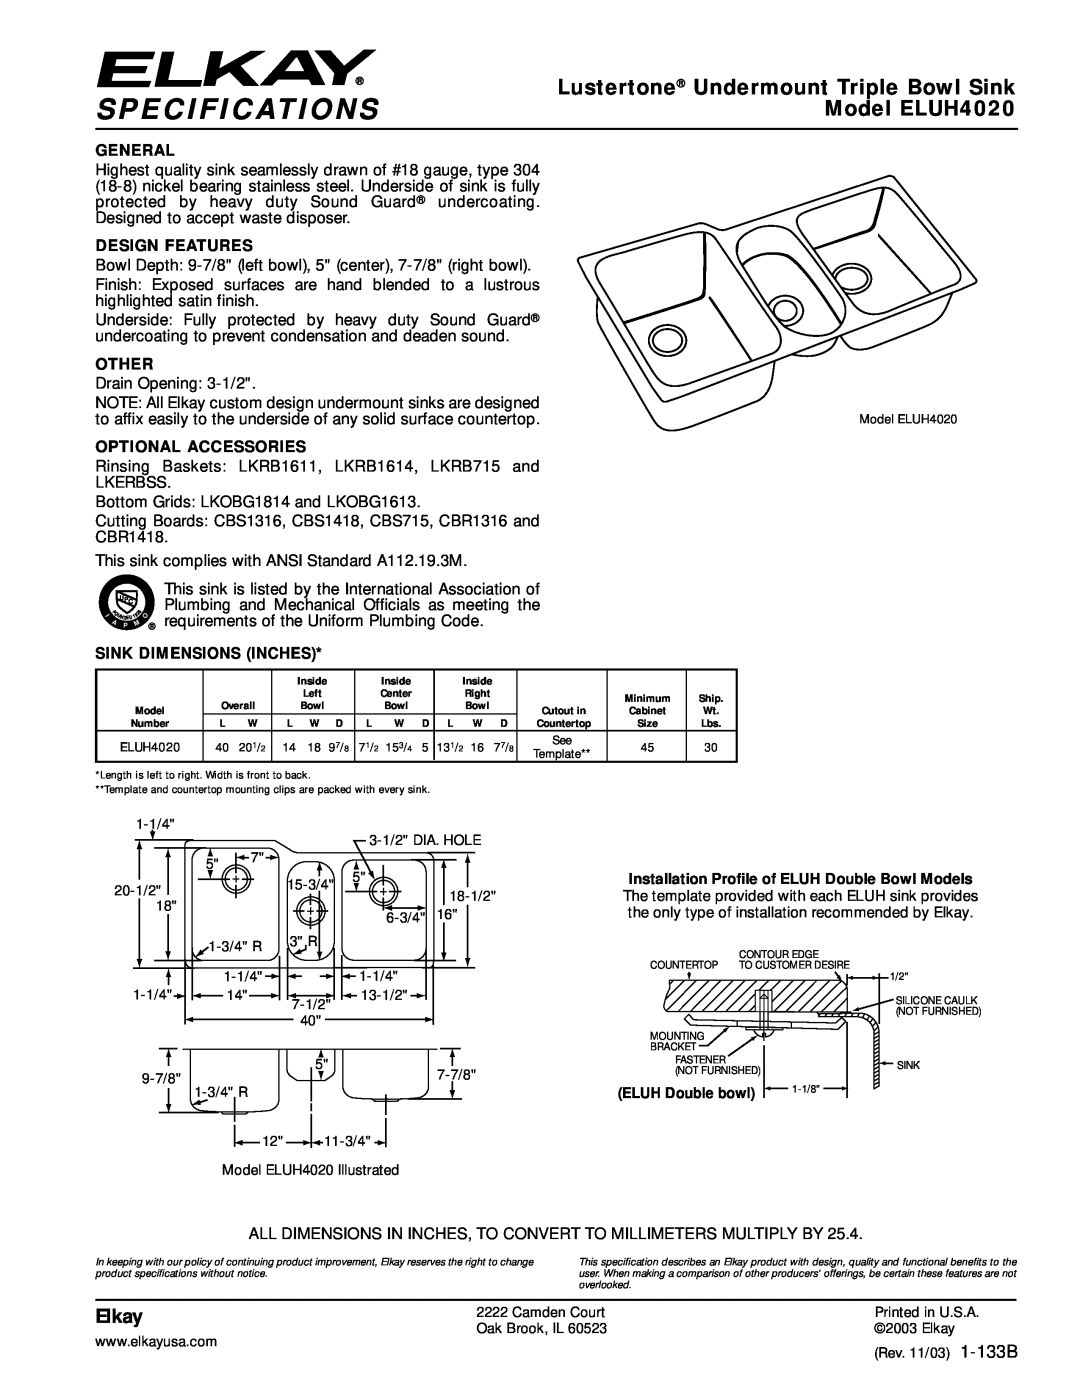 Elkay specifications Specifications, Lustertone Undermount Triple Bowl Sink, Model ELUH4020, Elkay, General, Other 